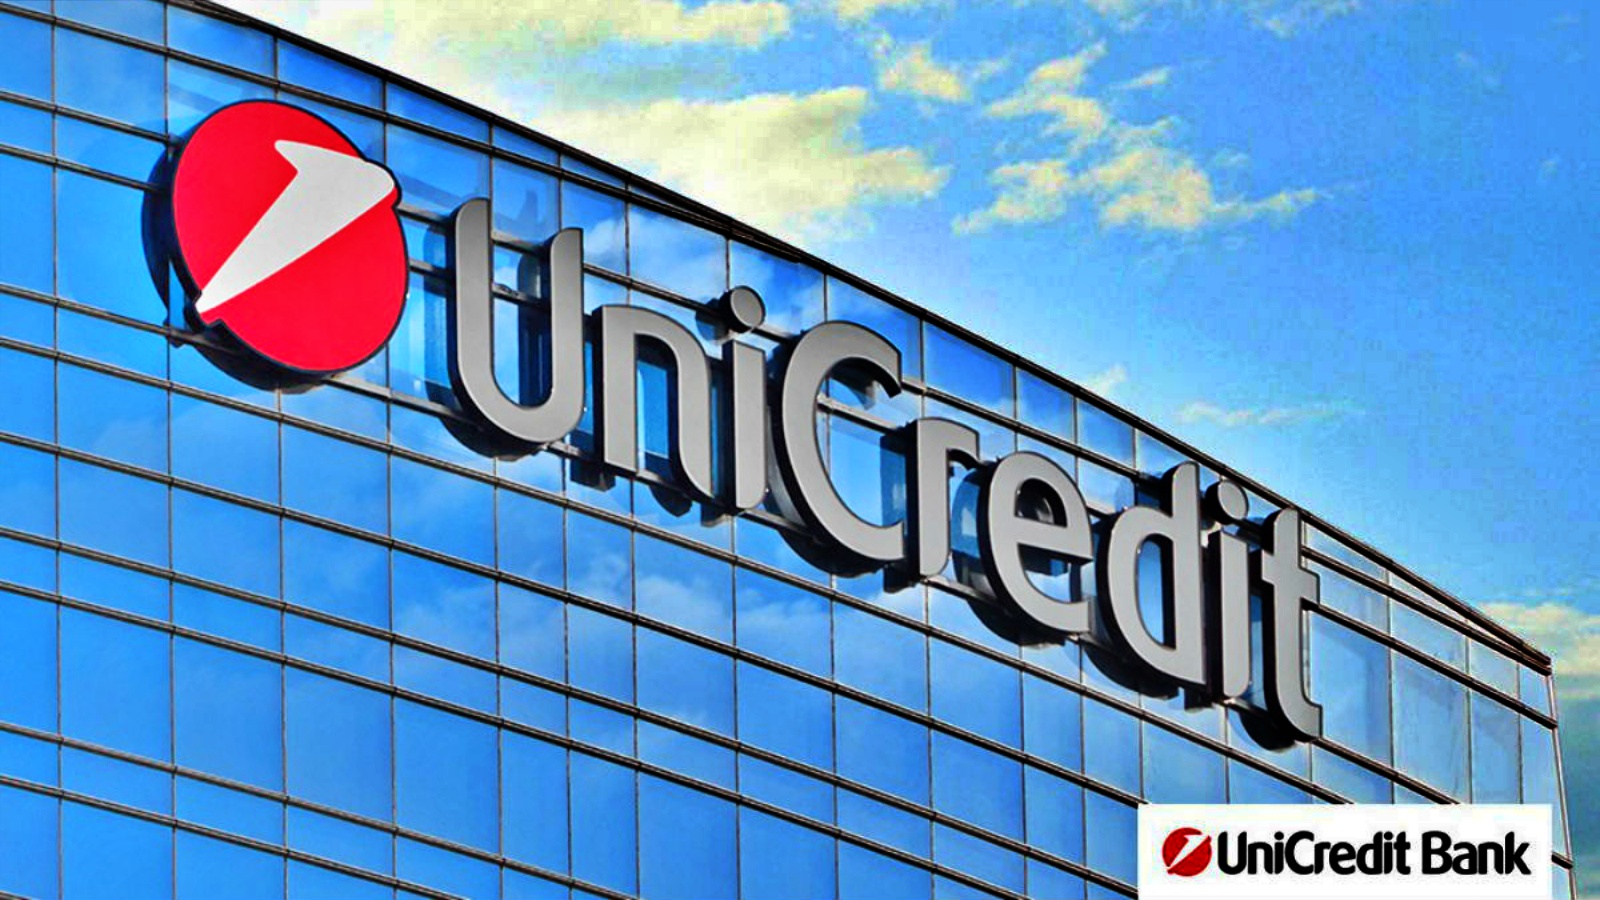 UniCredit Bank preferential